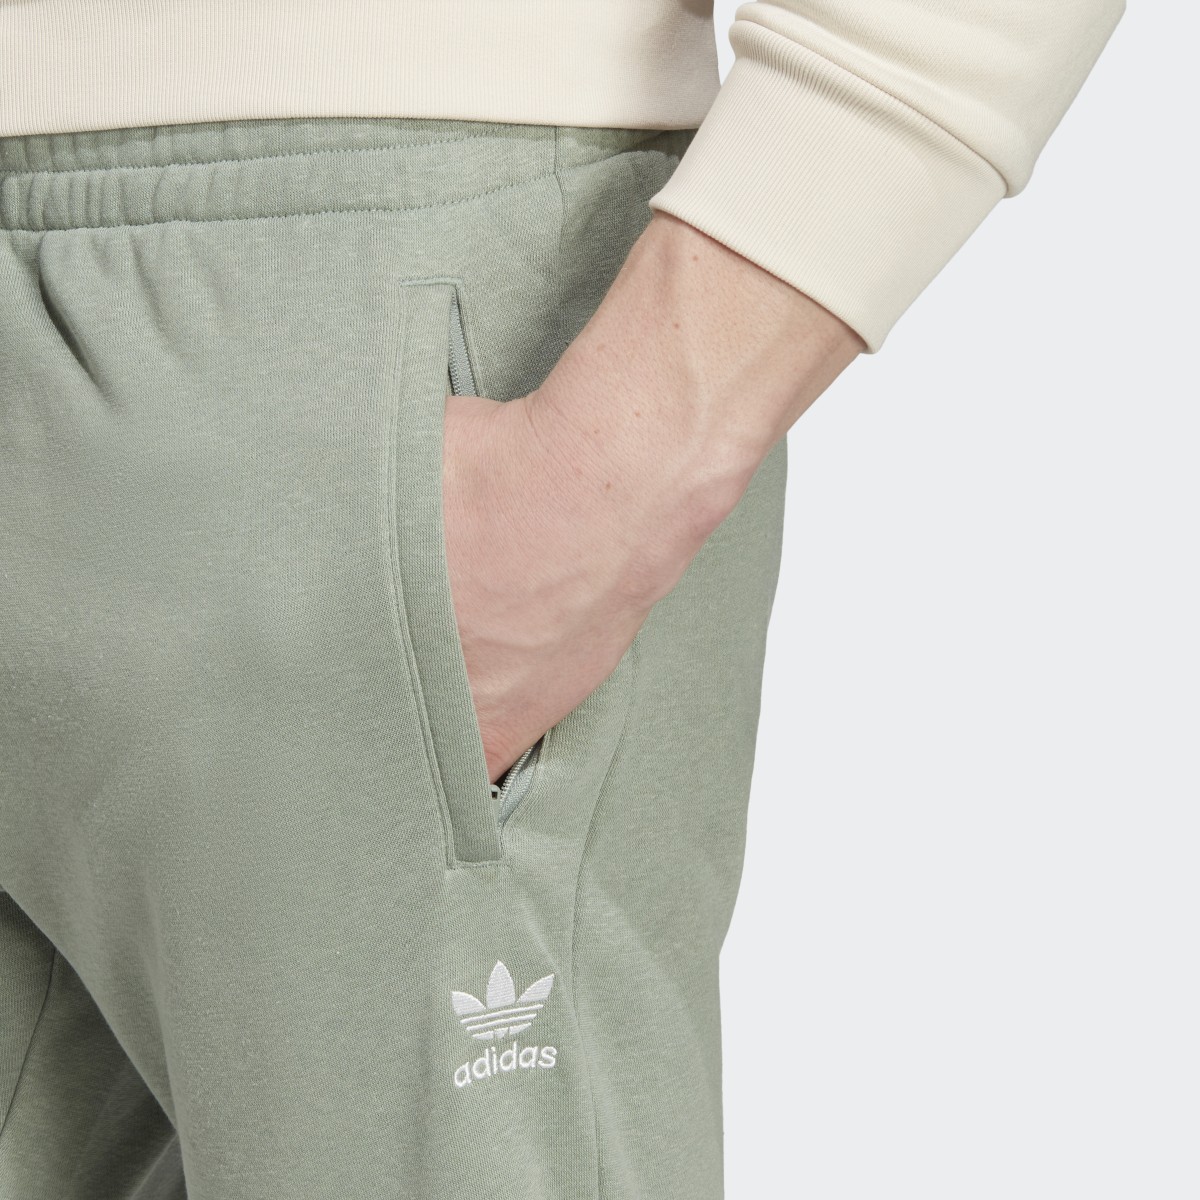 Adidas Essentials+ Made with Hemp Sweat Pants. 5